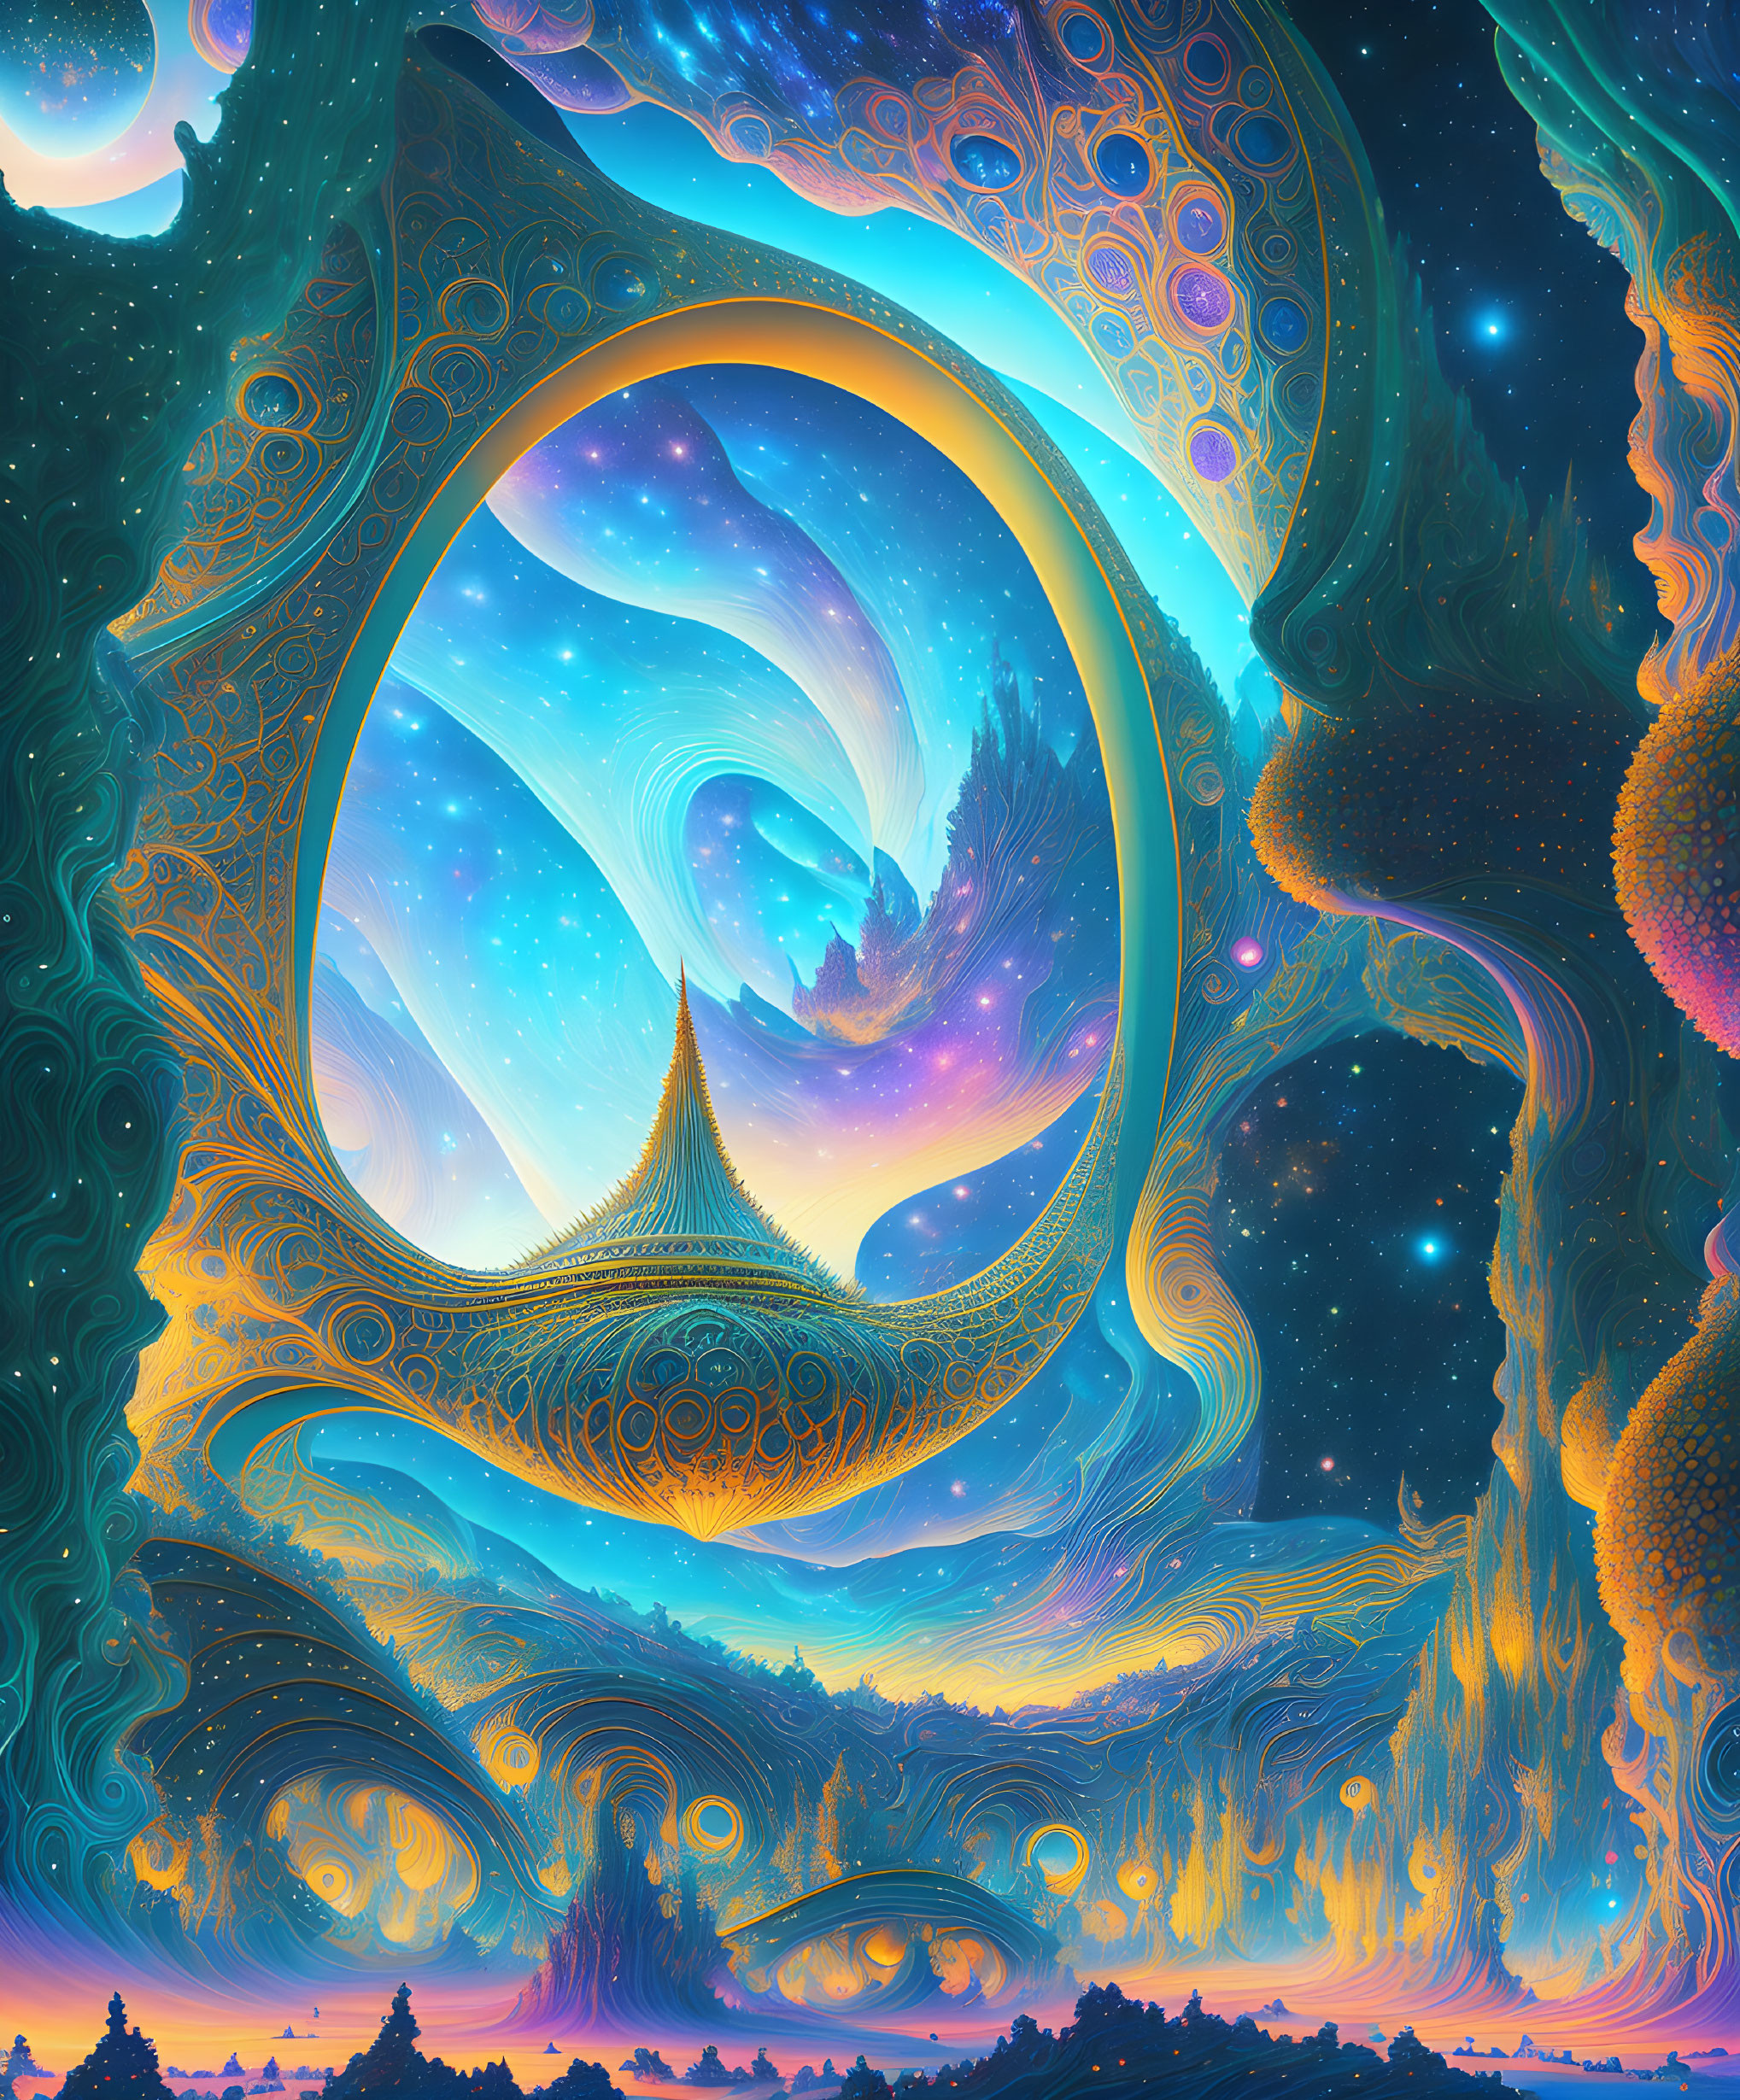 Cosmic Dreamworld: Portal of Wonders